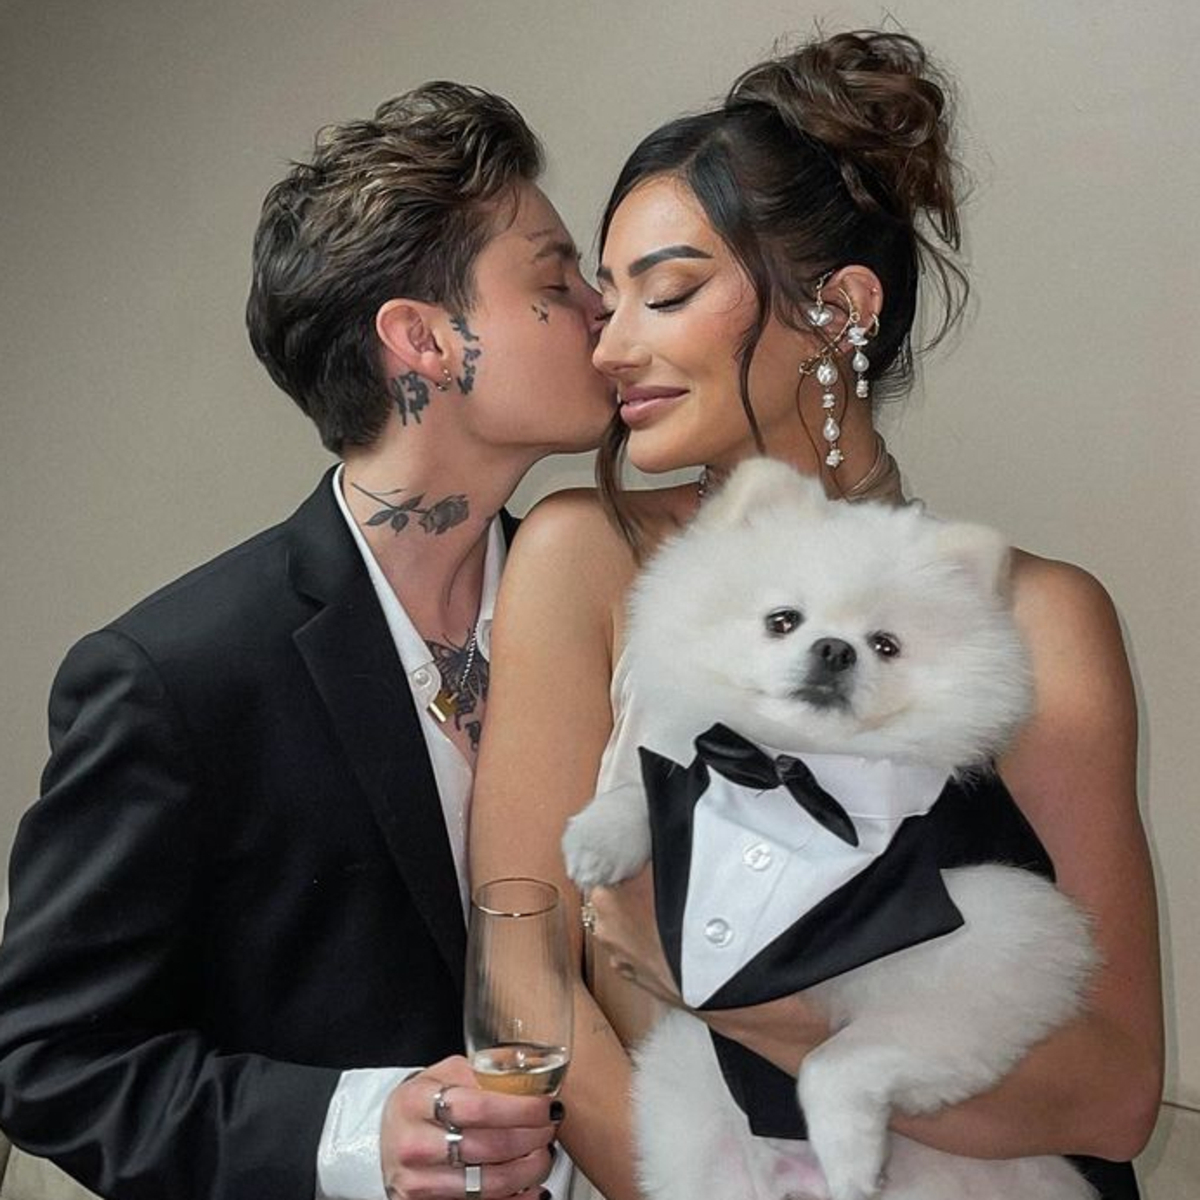 Francesca Farago Shares “Emotional” Wedding Dress Shopping Experience